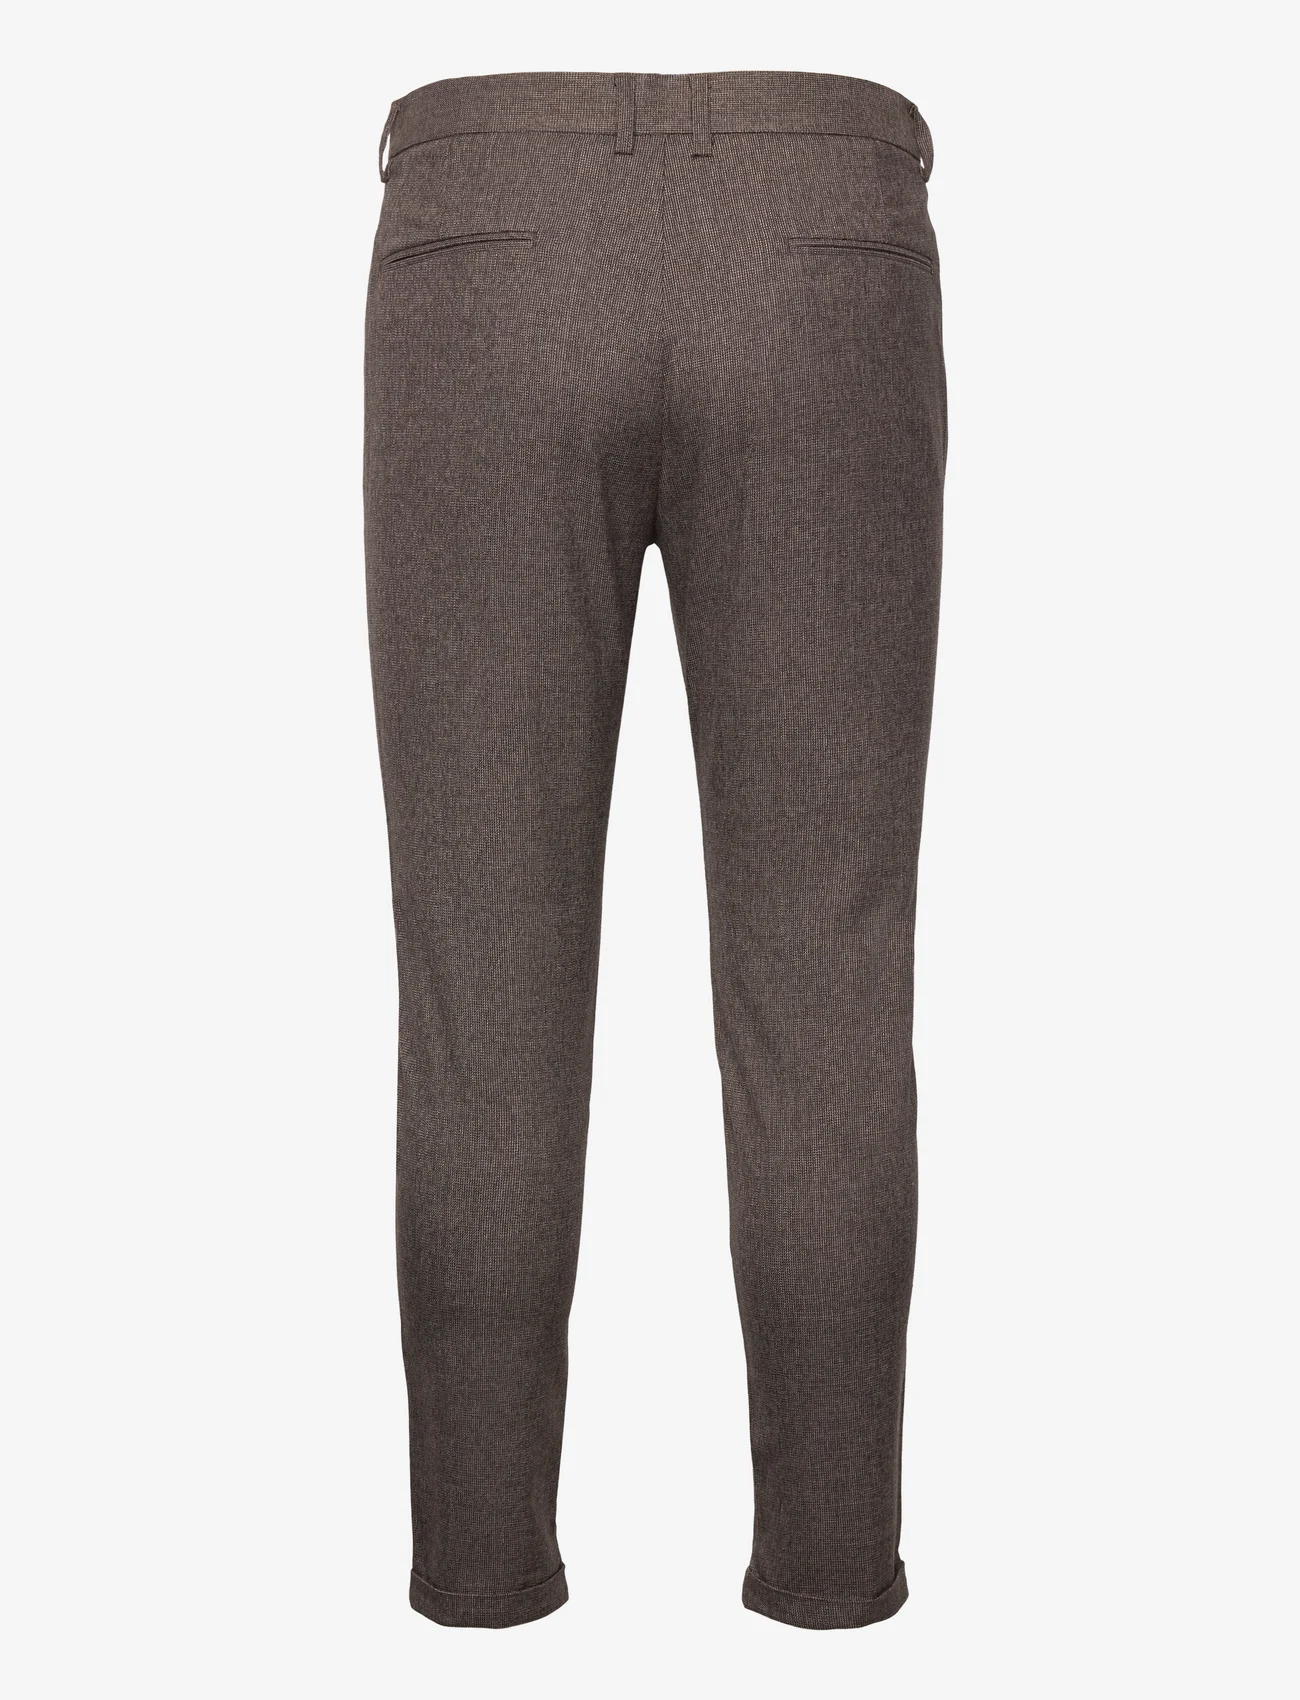 Lindbergh - Melange superflex pants - suit trousers - brown mel - 1